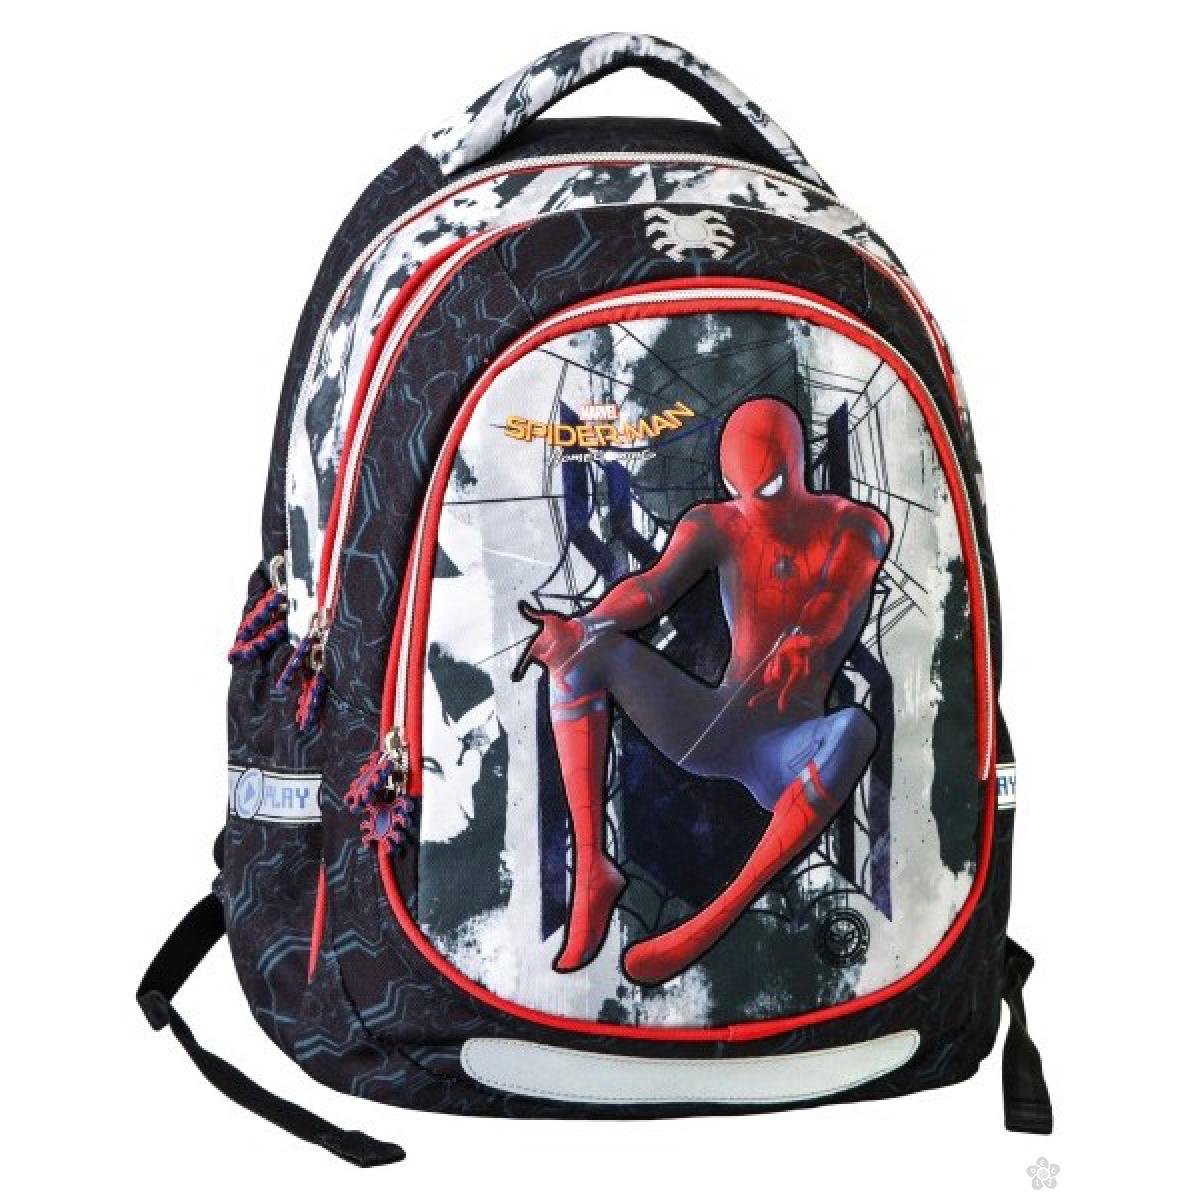 Anatomski ranac Spiderman 316020 